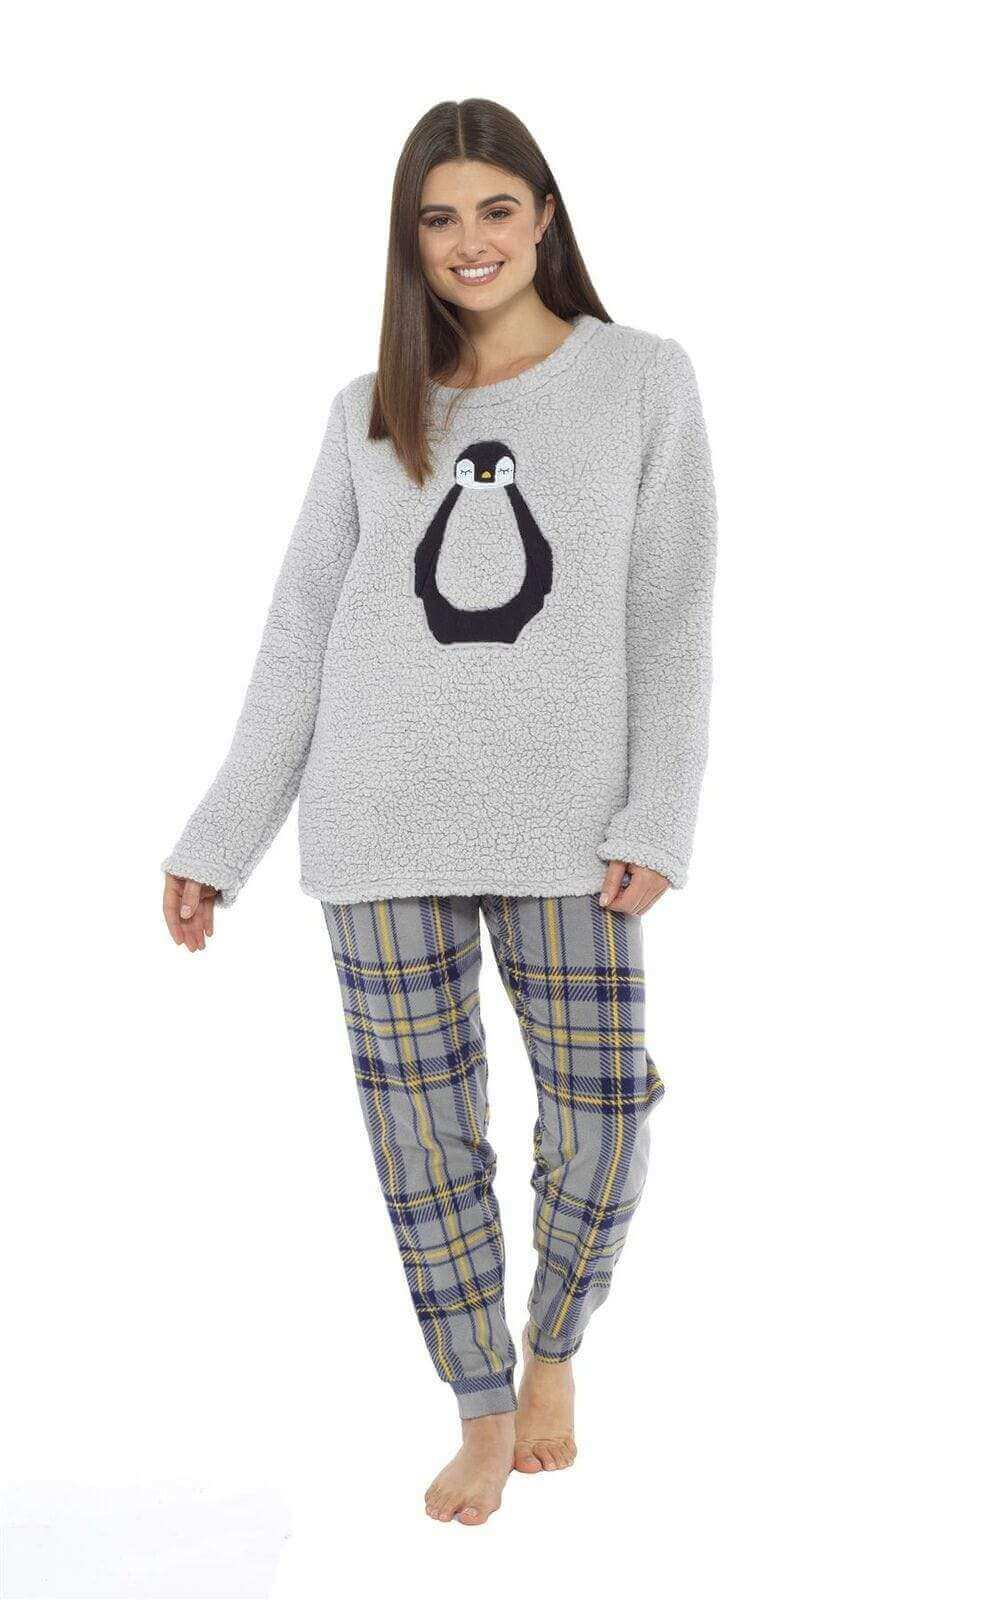 Women's Penguin Snuggle Teddy Fleece Pyjama Set. Buy now for £20.00. A Pyjamas by Daisy Dreamer. 12-14, 16-18, 20-22, 8-10, animal, bridesmaid, check, christmas, festive, flannel, fleece, grey, gym, hotel, ladies, large, loungewear, medium, nightwear, pen